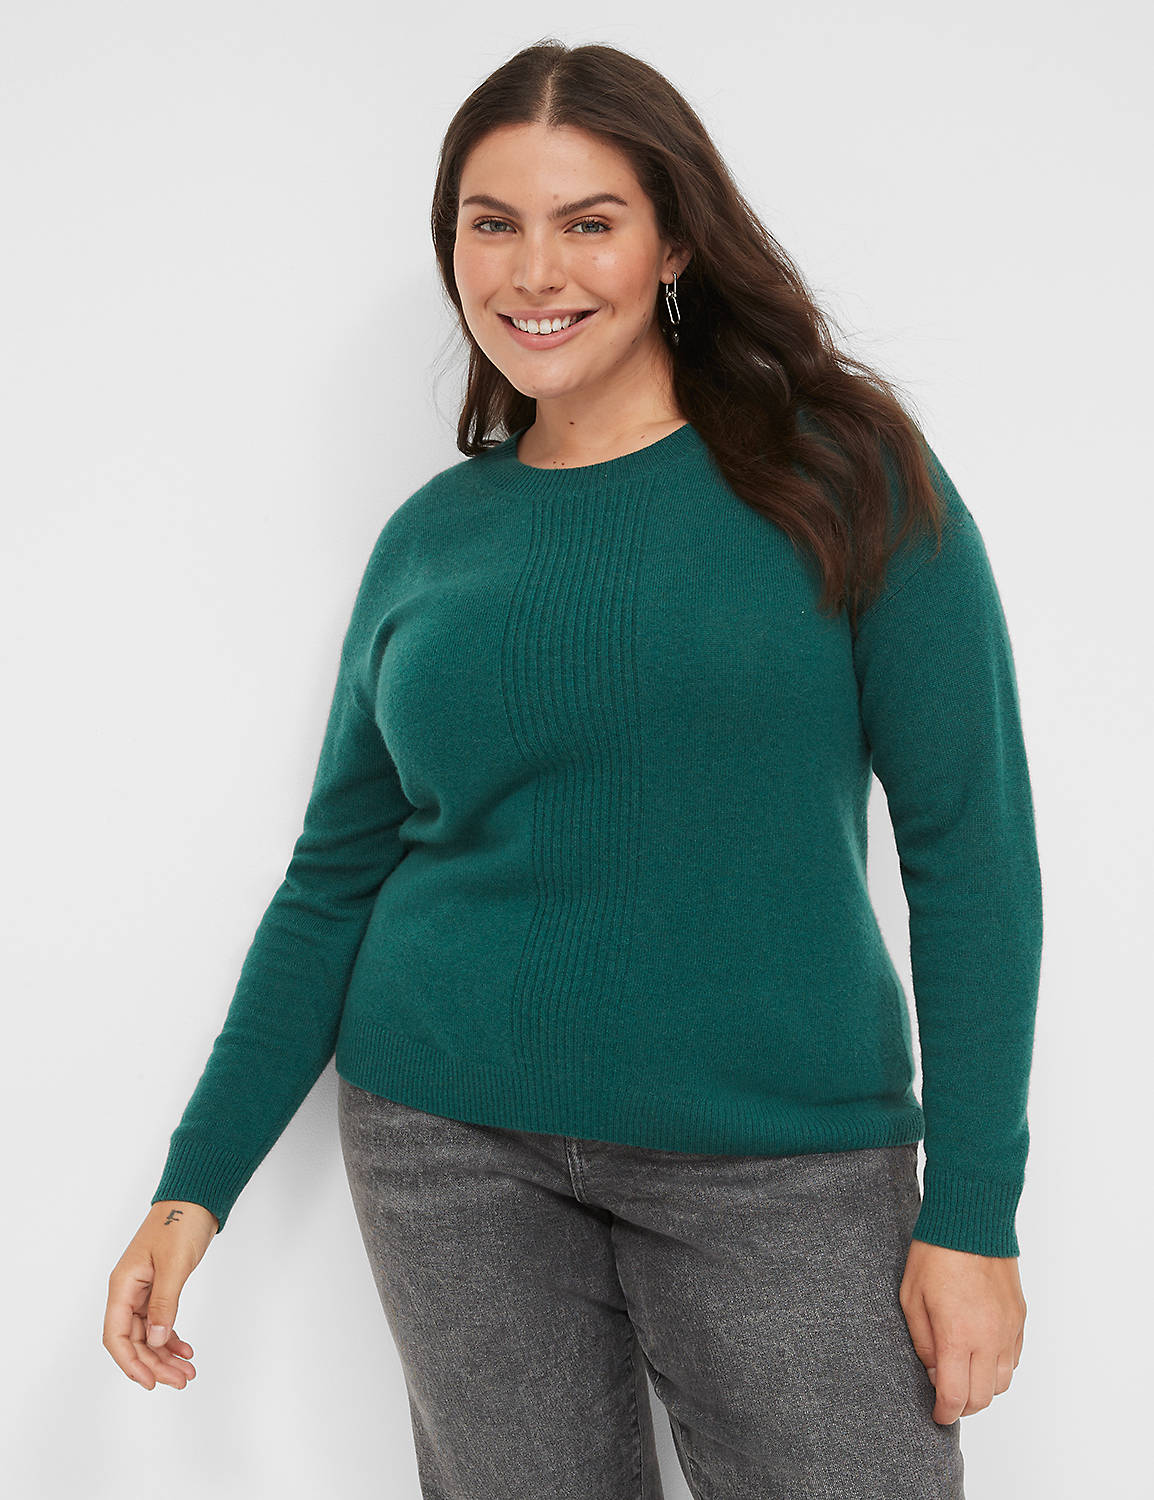 lane bryant long-sleeve cashmere sweater 18/20 green